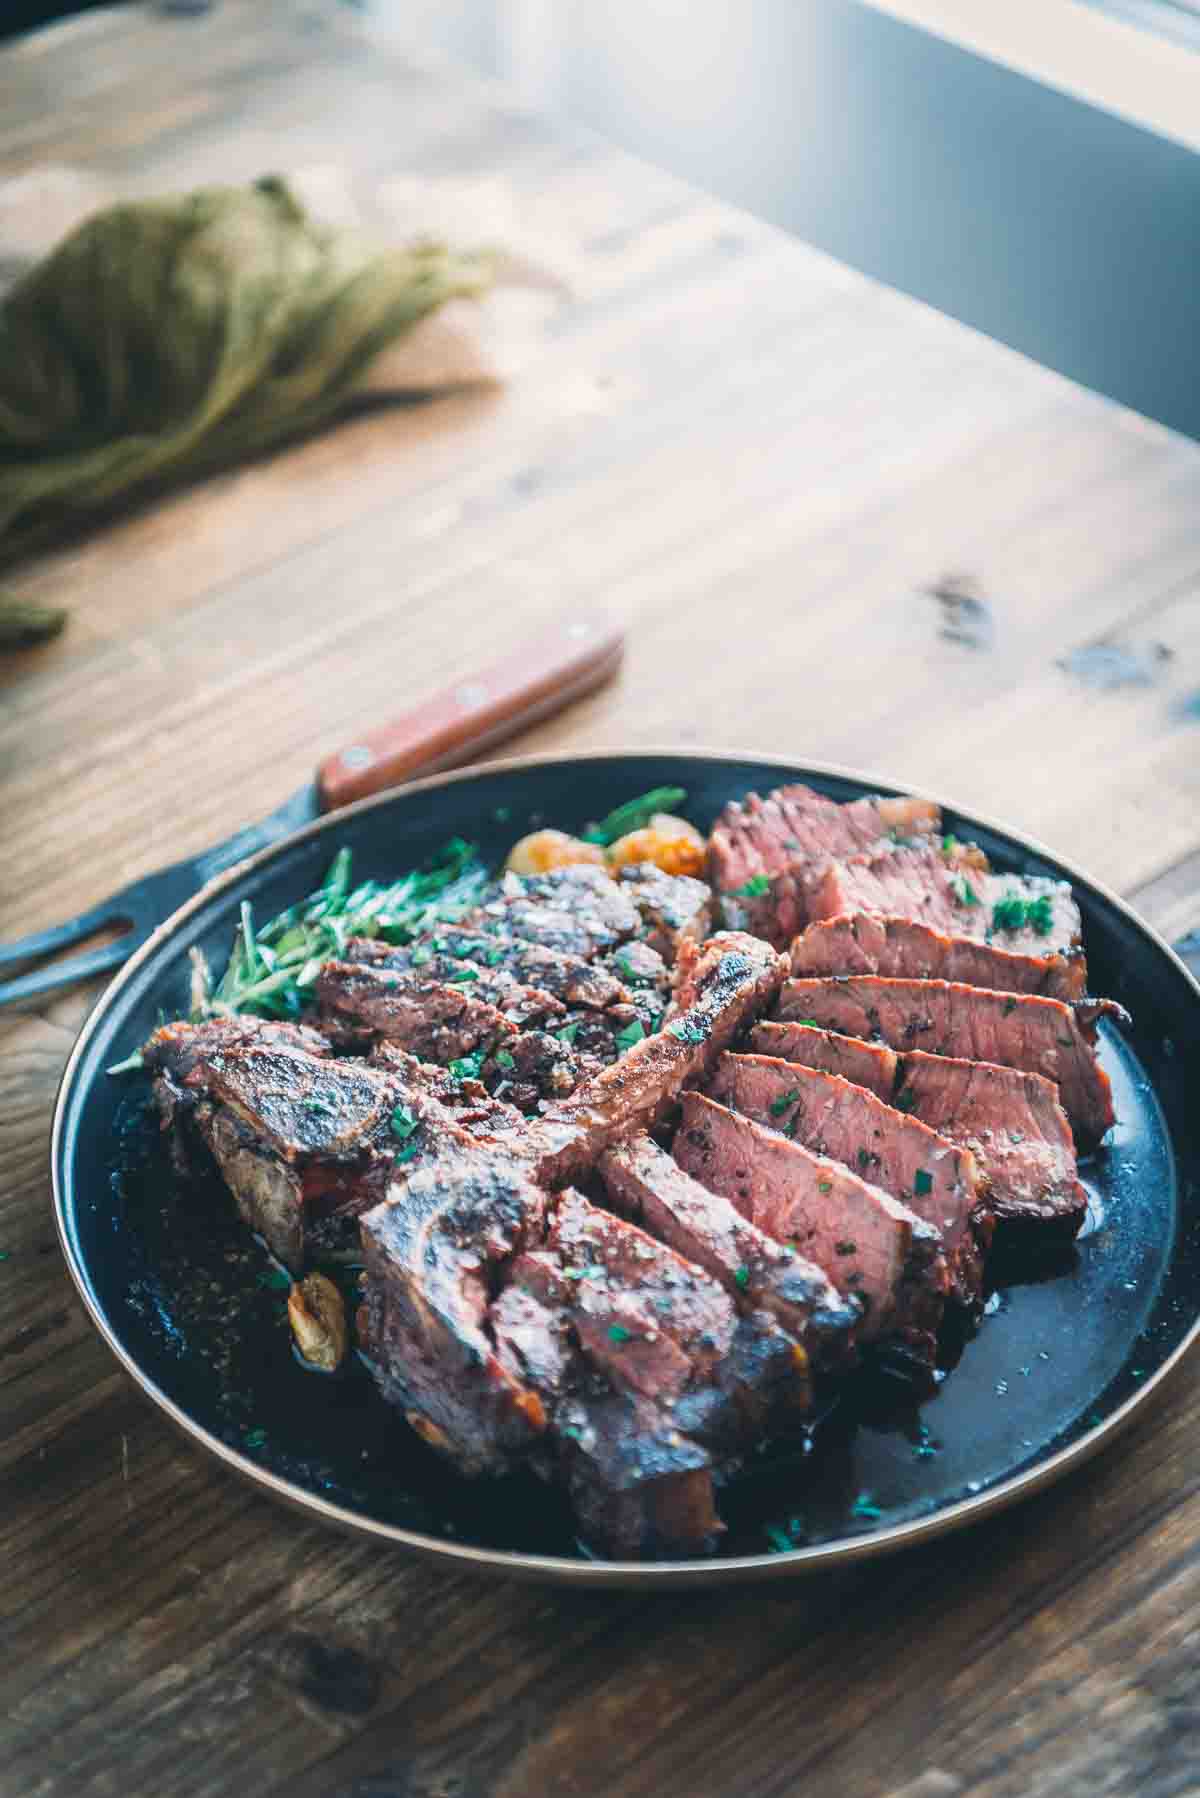 Sliced porterhouse steak on a plate. 